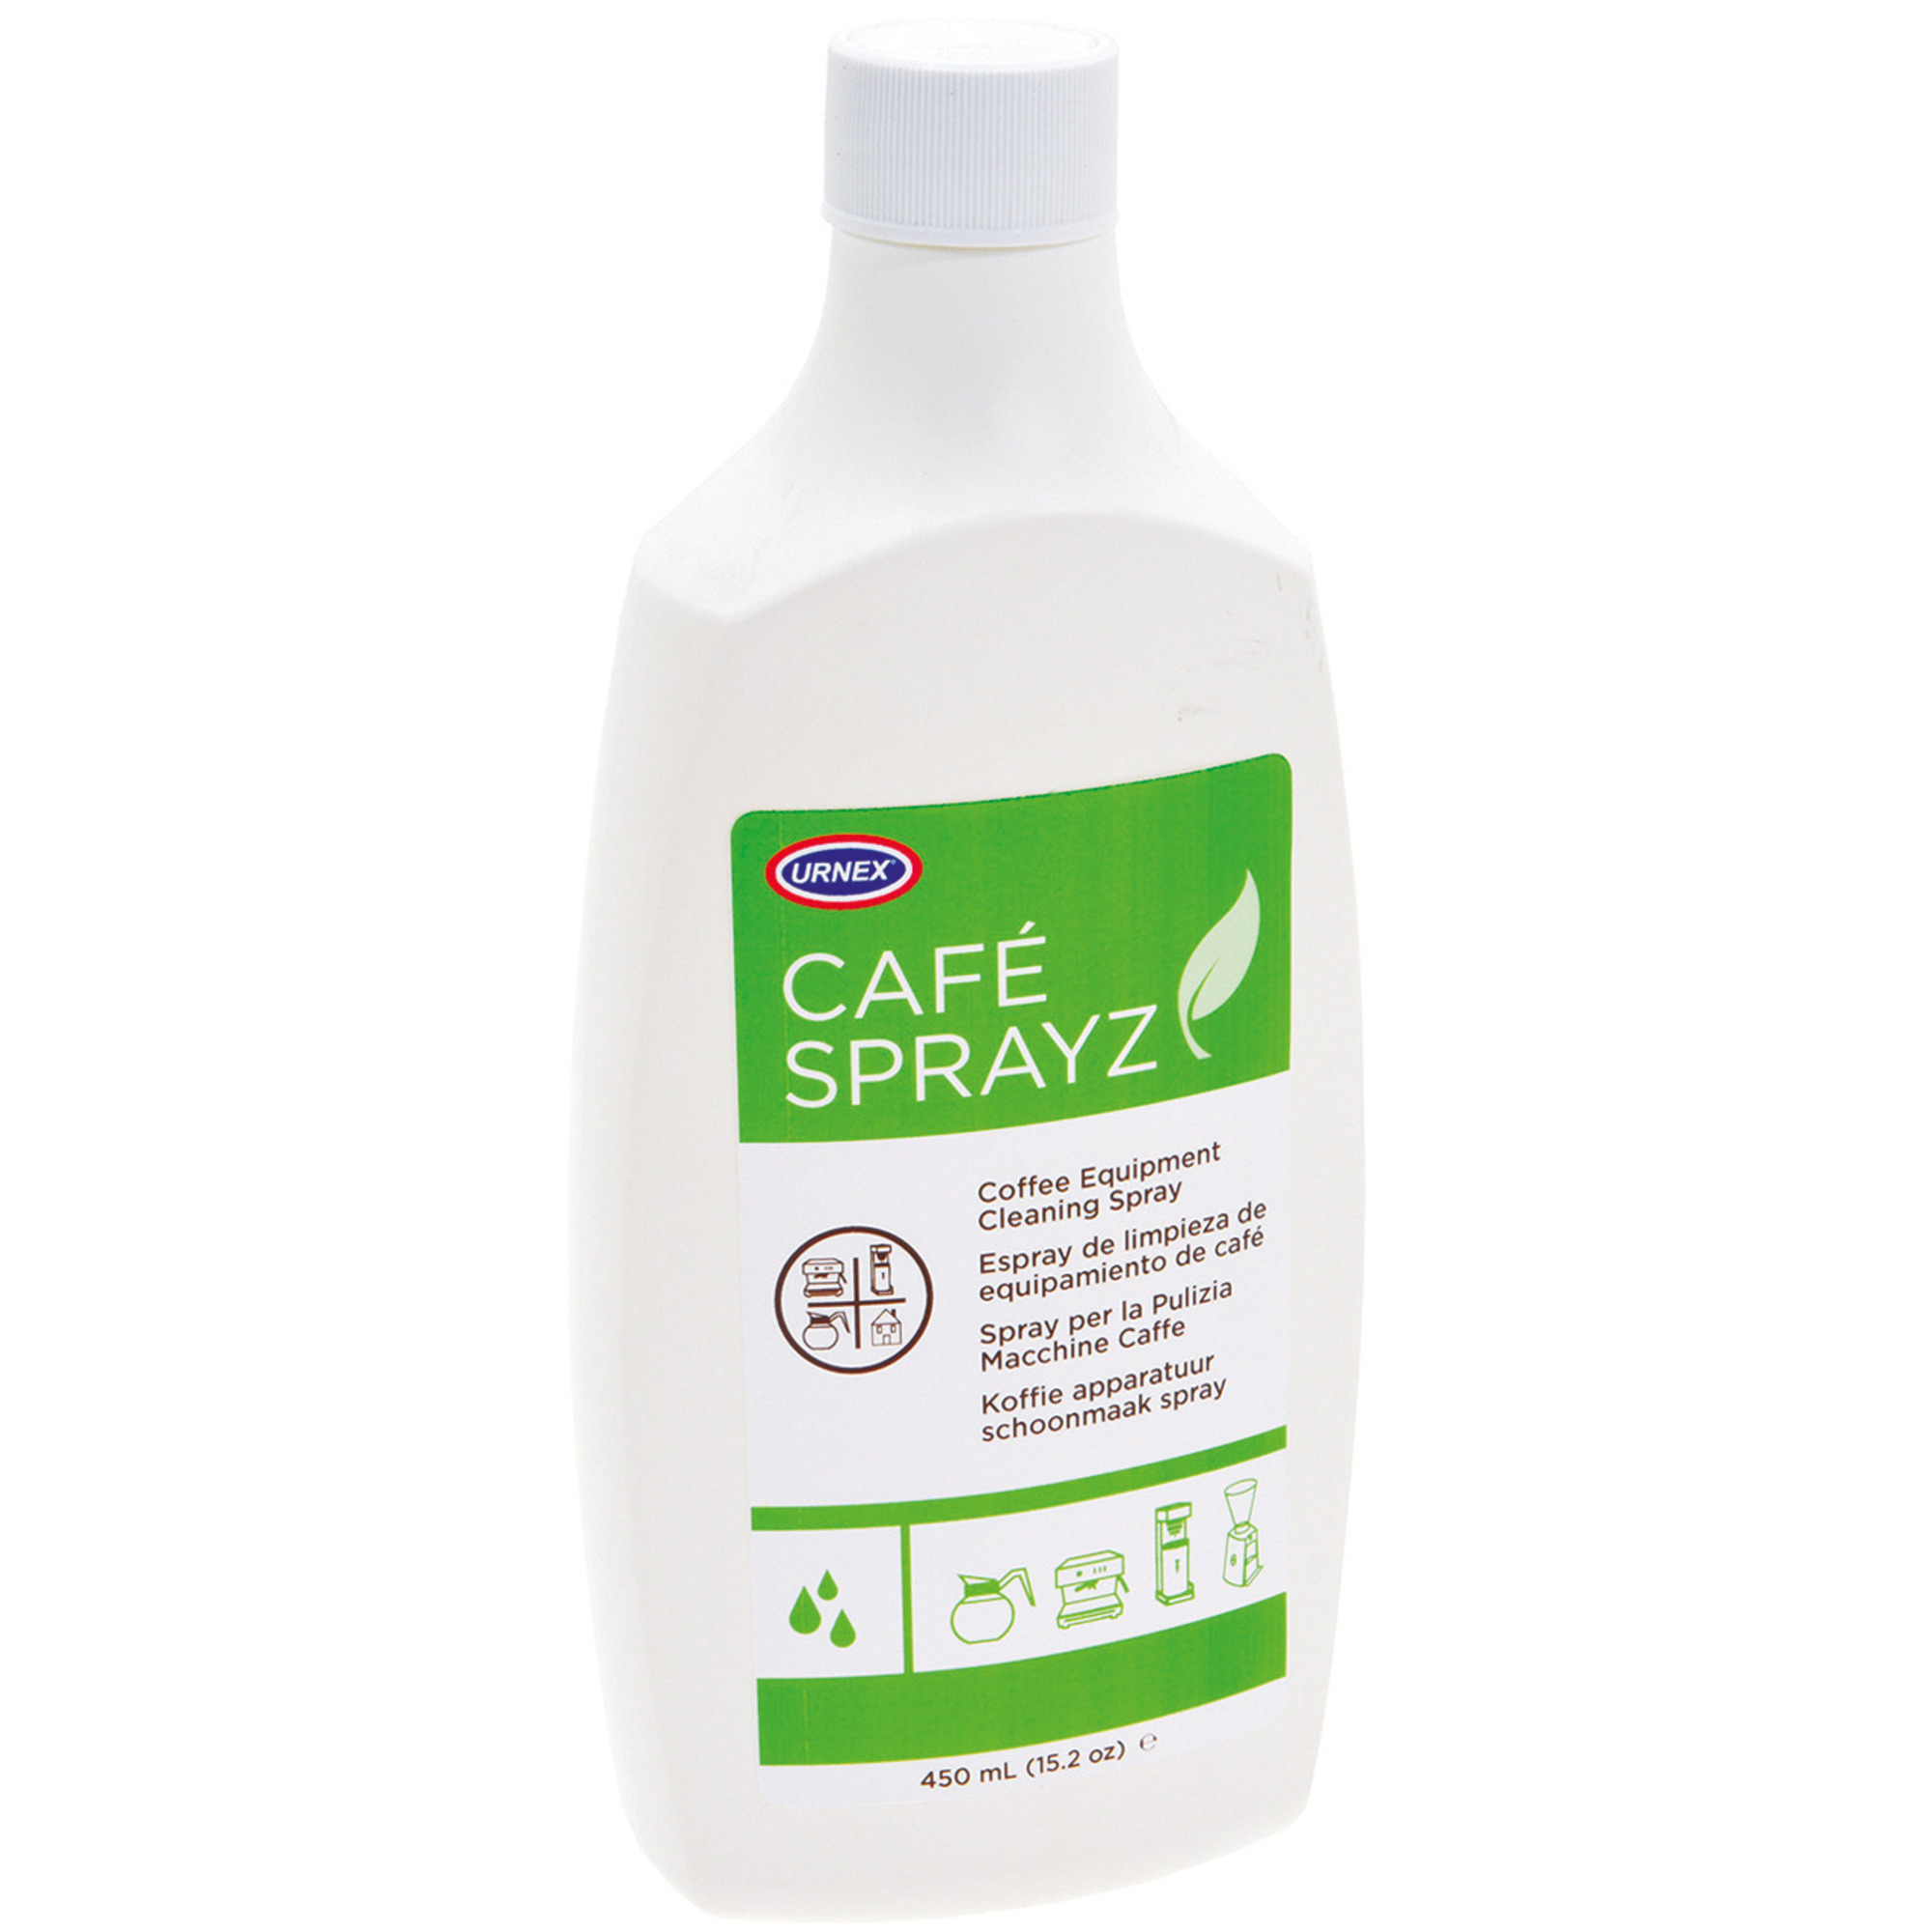 Urnex Cafe spray 450 ml.